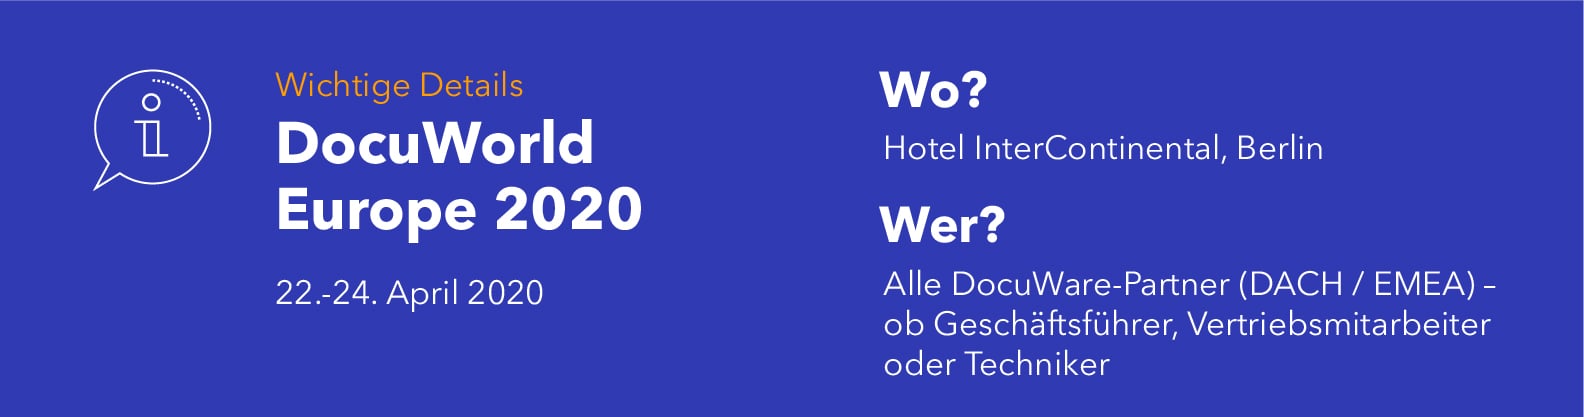 DocuWorld Europe 2020: Event-Details